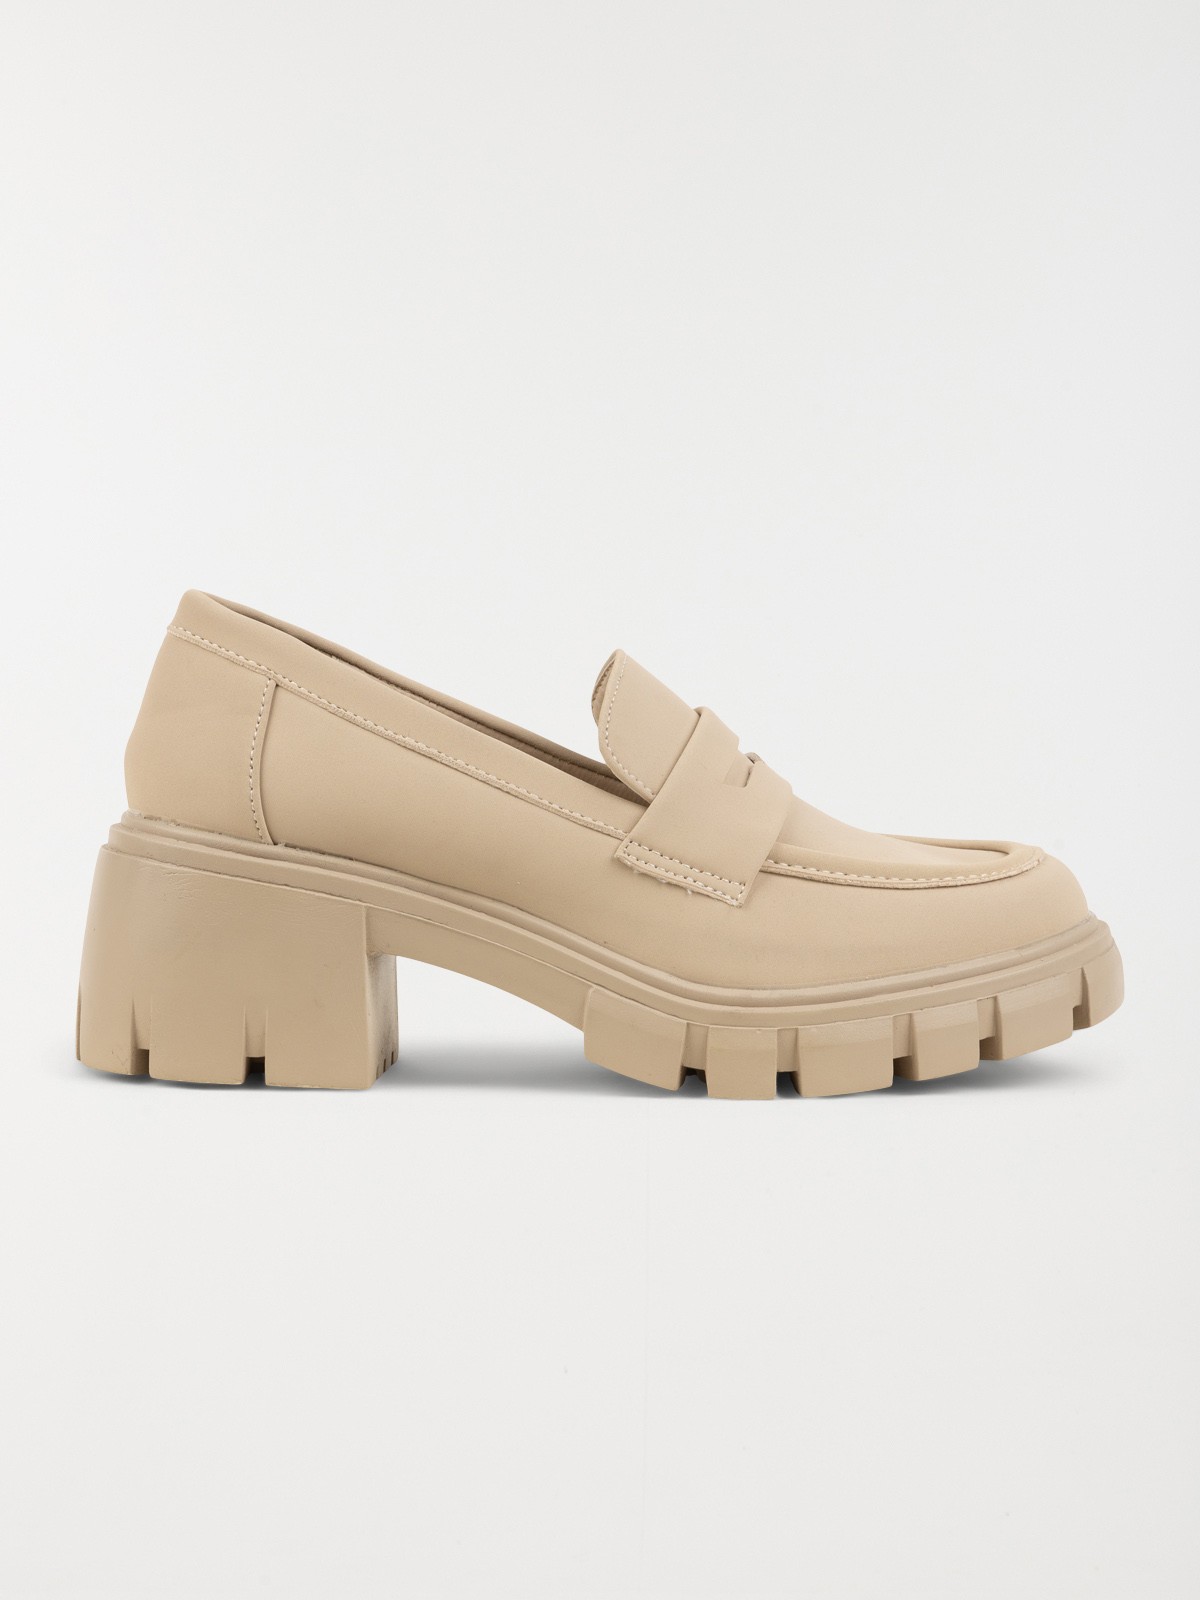 Chaussures confort femme (36-41) - DistriCenter